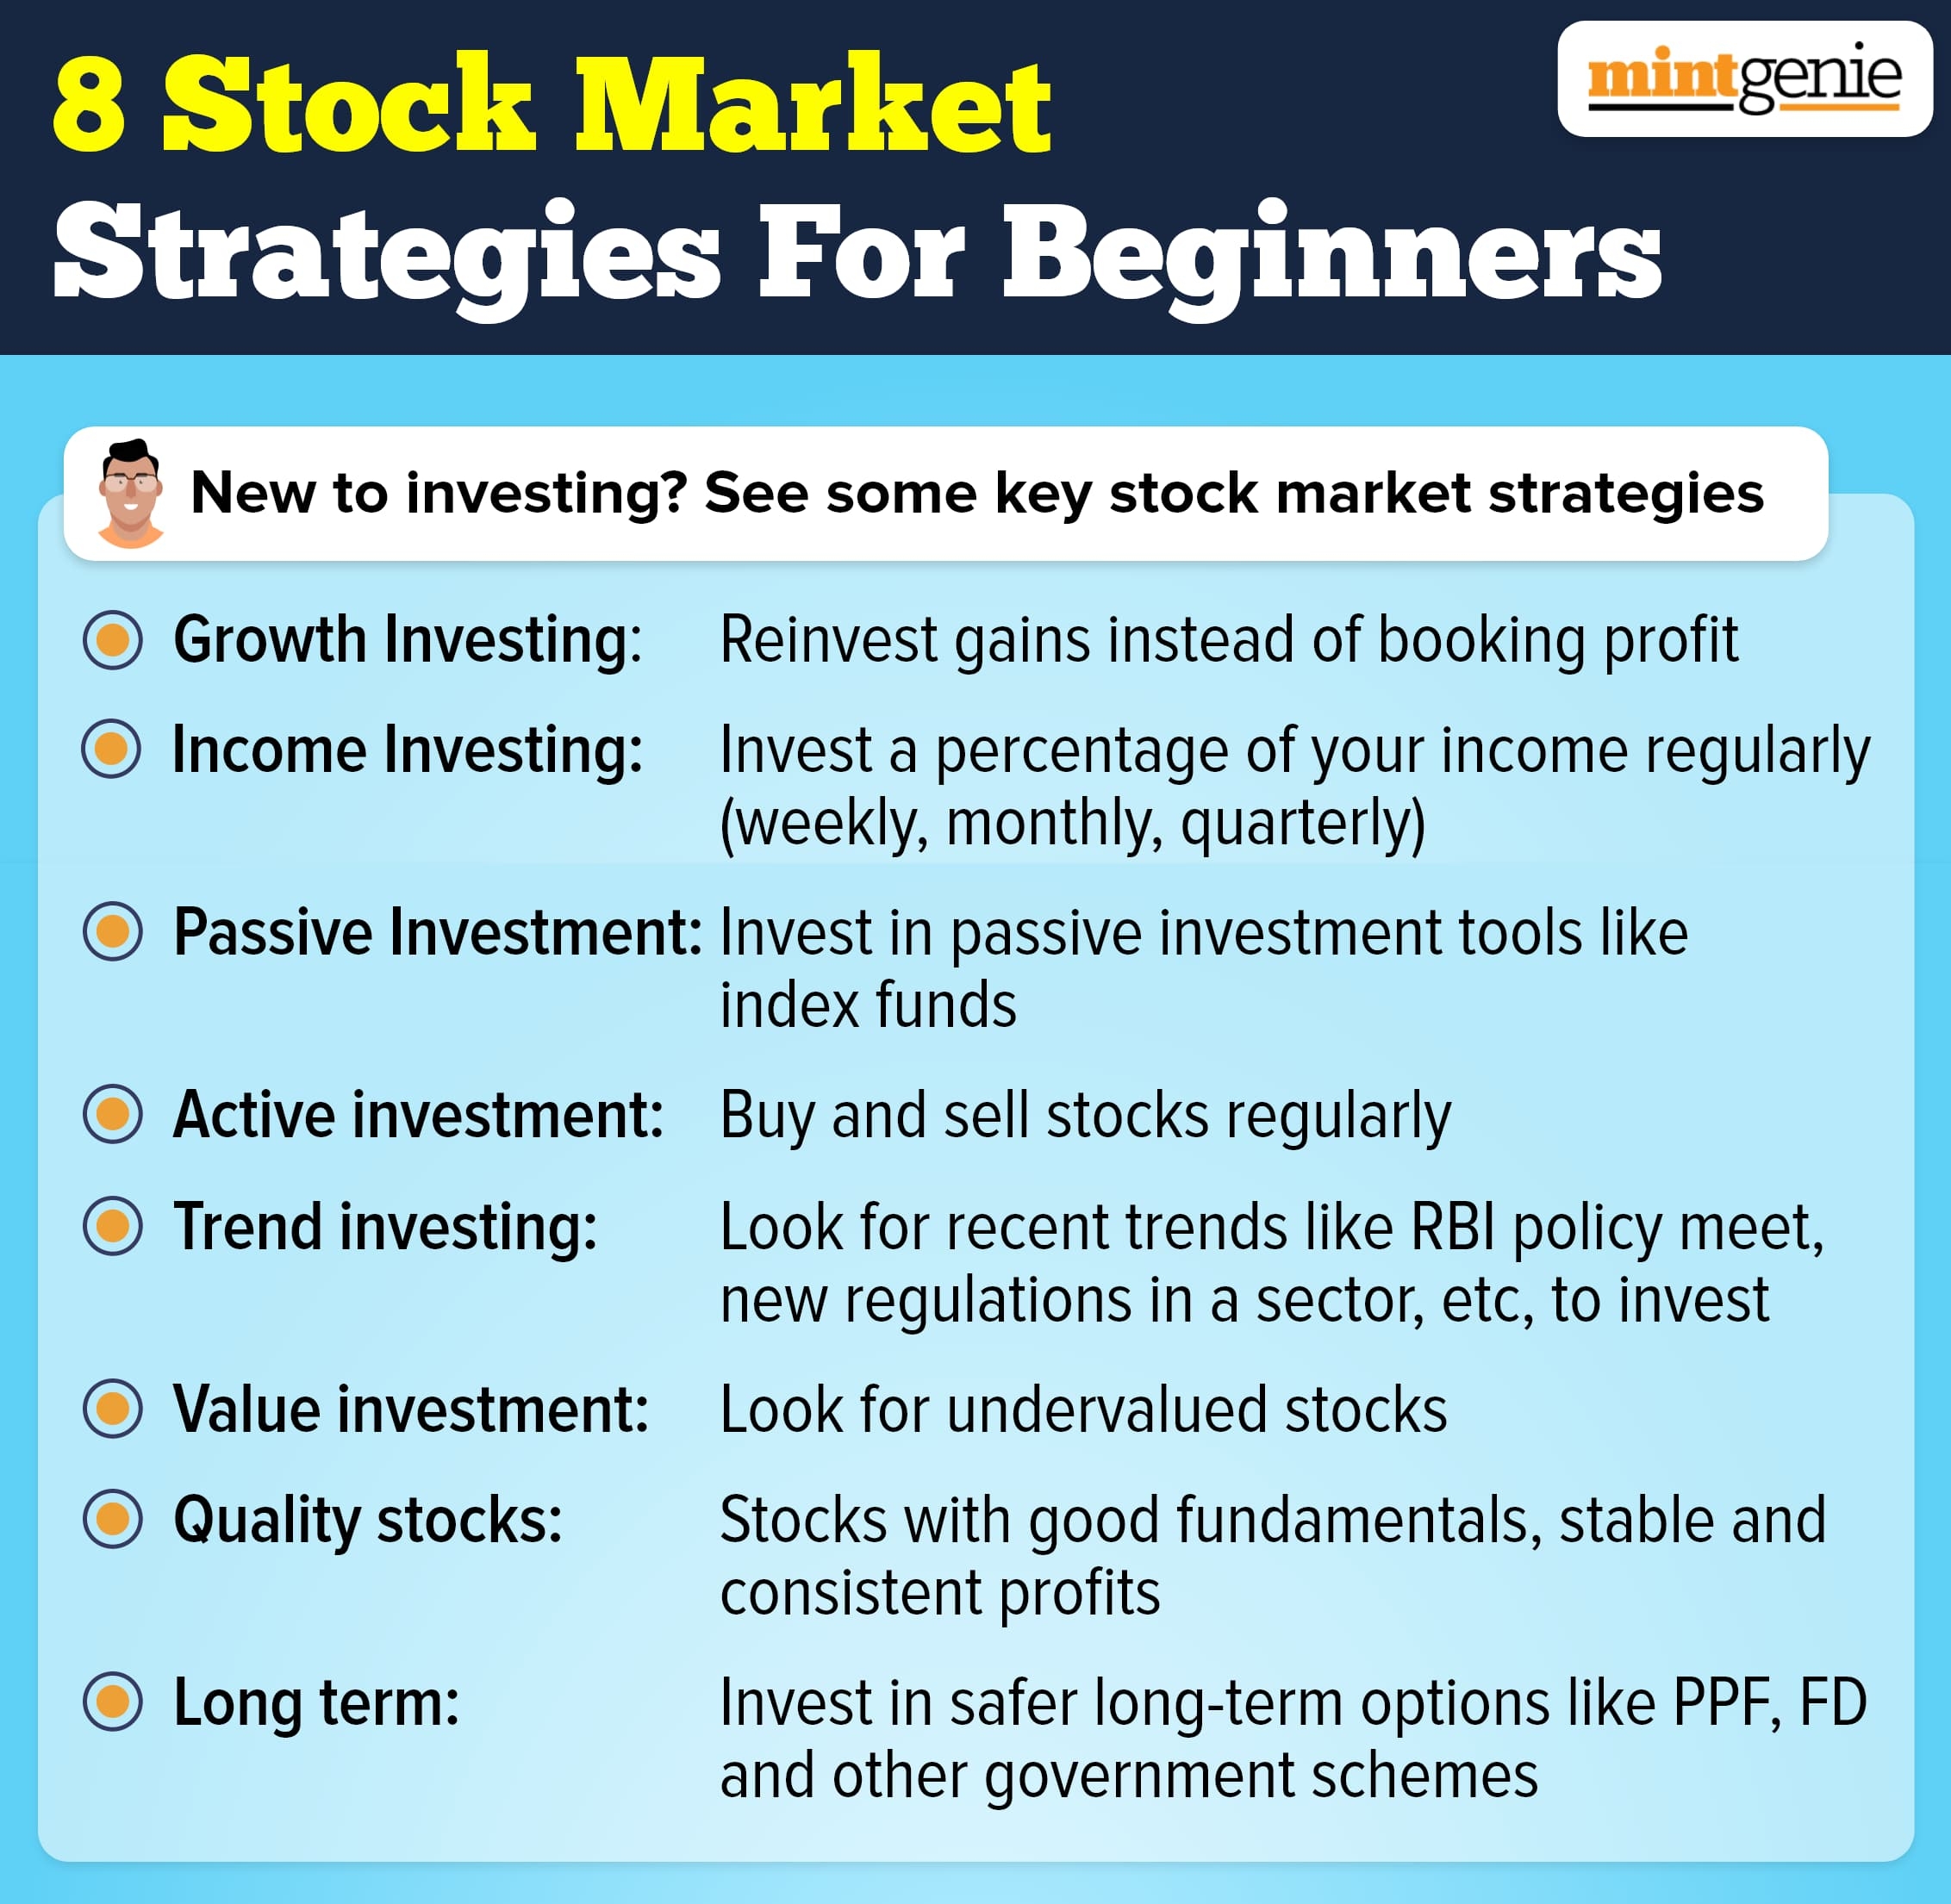 Stock market strategies for beginners